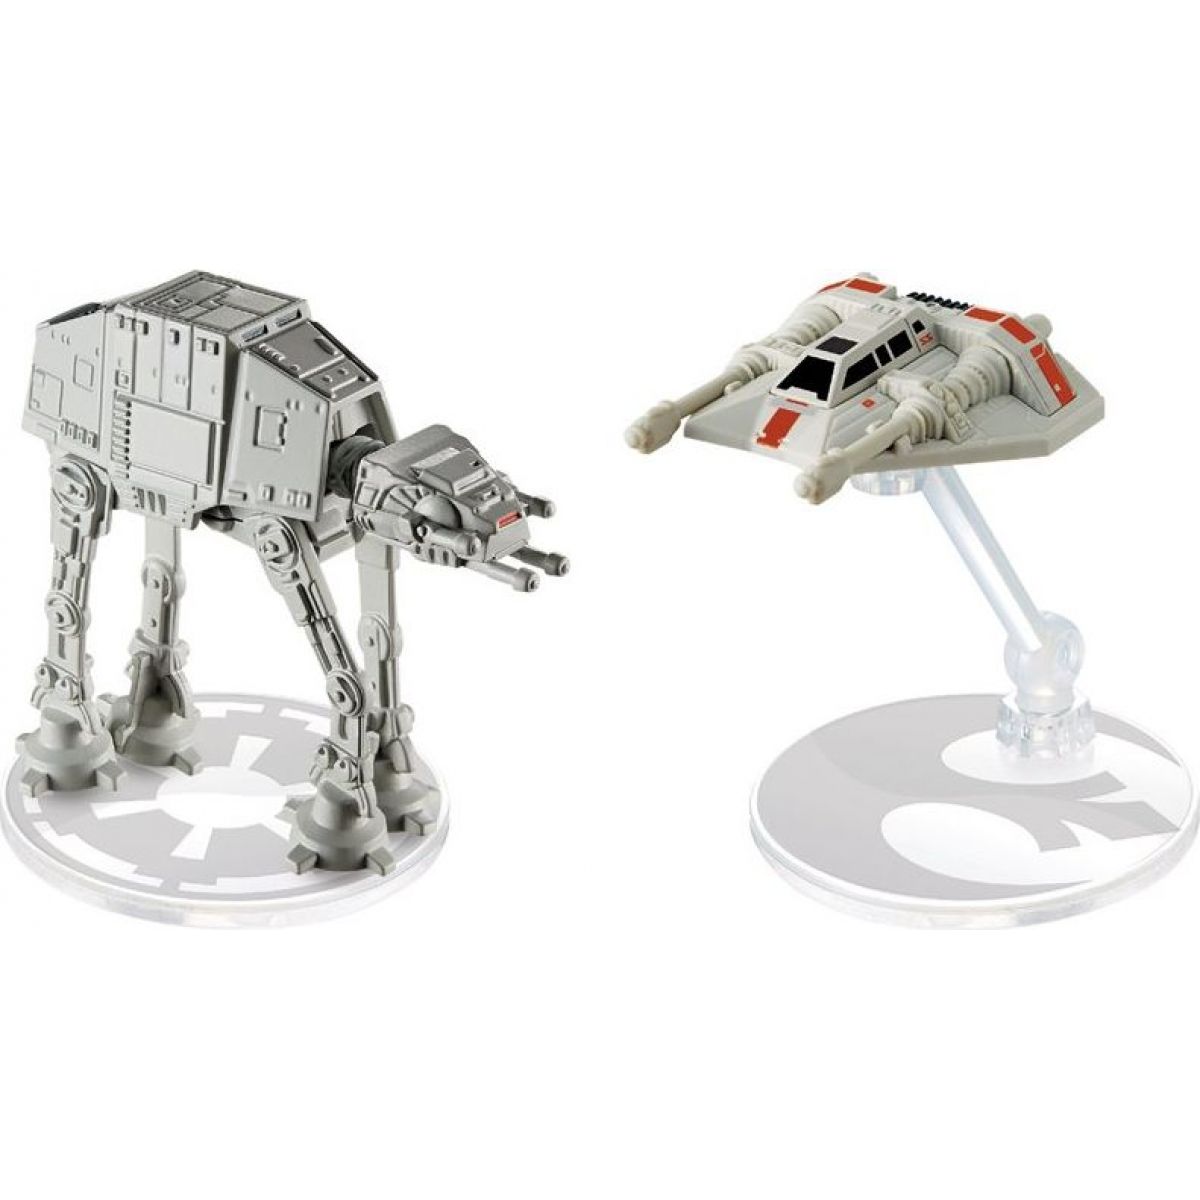 Hot Wheels Star Wars Starship - AT-AT vs. Rebel Snowspeeder DYH43